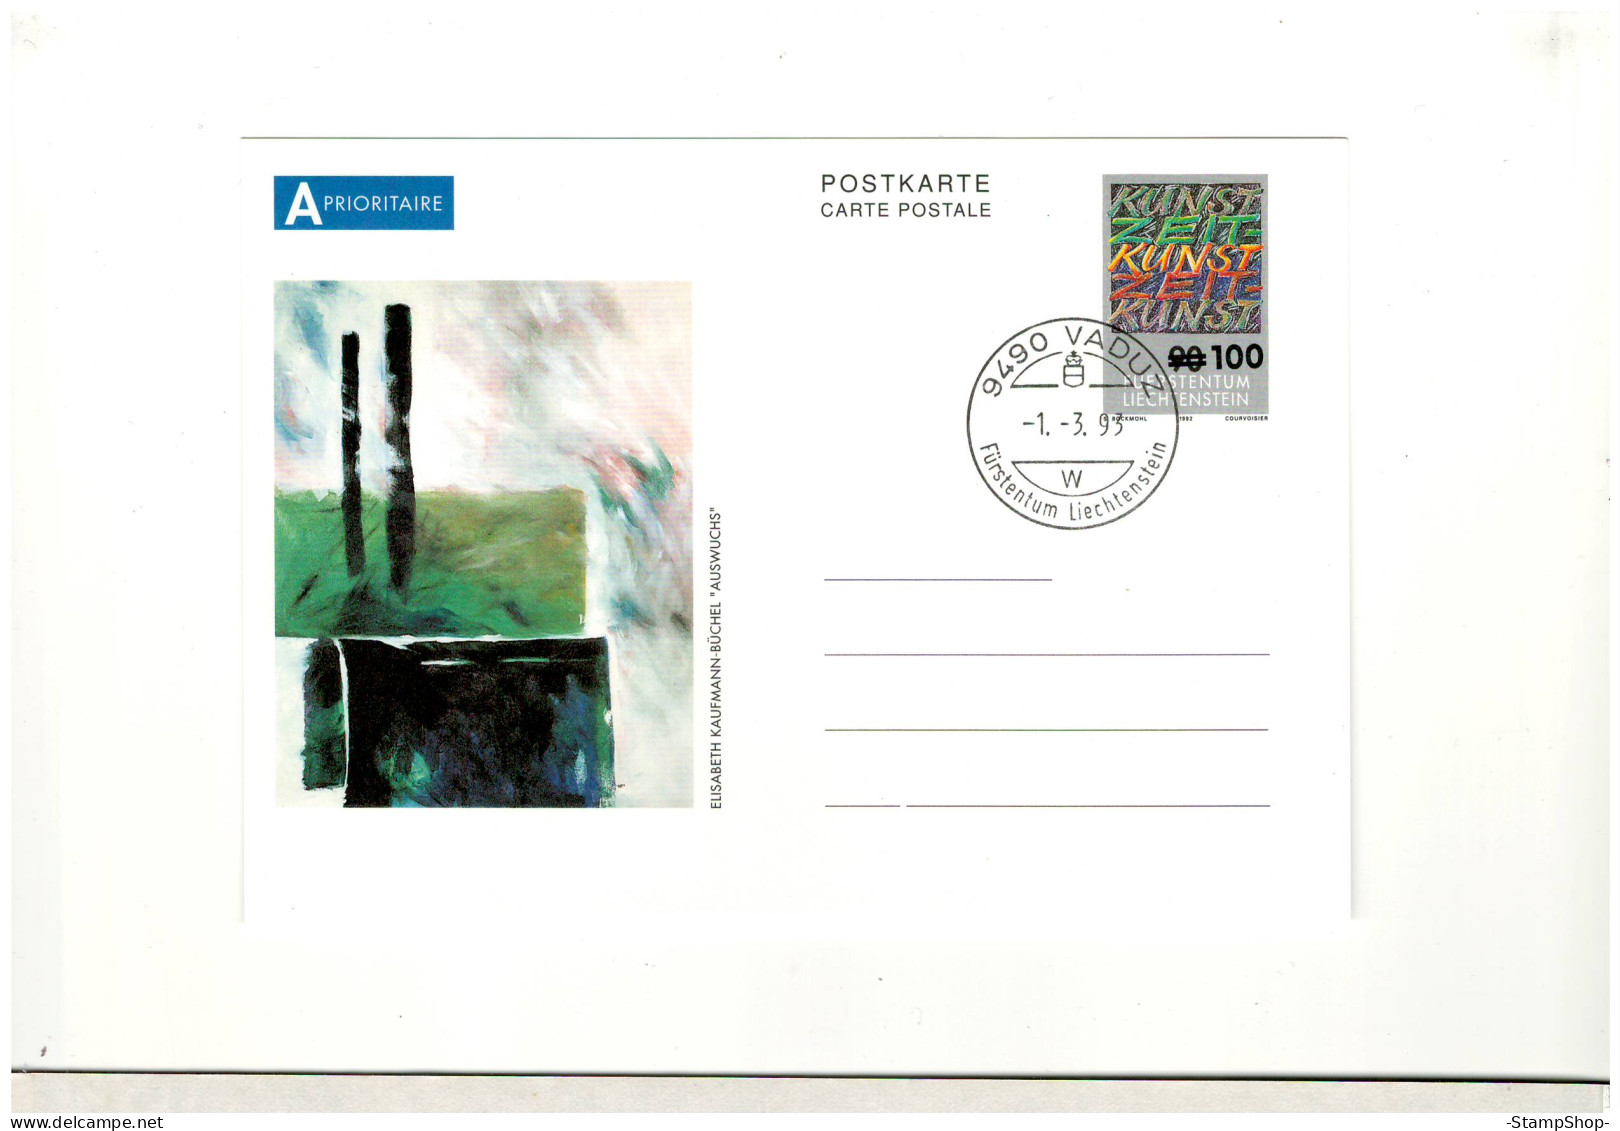 1993 Liechtenstein - Vaduz Postmark, Art, Overprint With Higher Value - Postcard - BX2047 - Covers & Documents